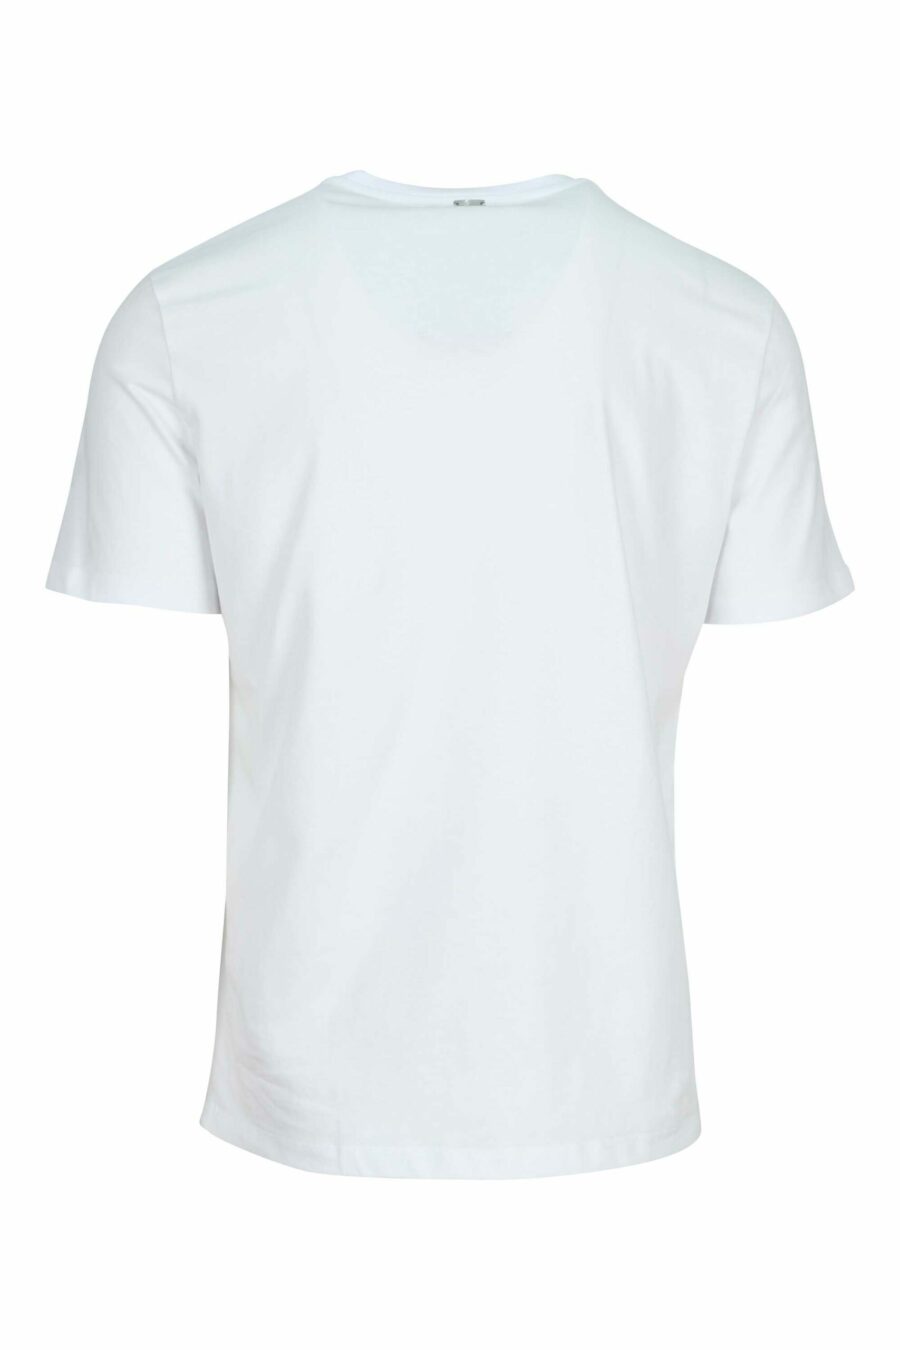 Weißes Strick-T-Shirt - 8055721917702 1 skaliert